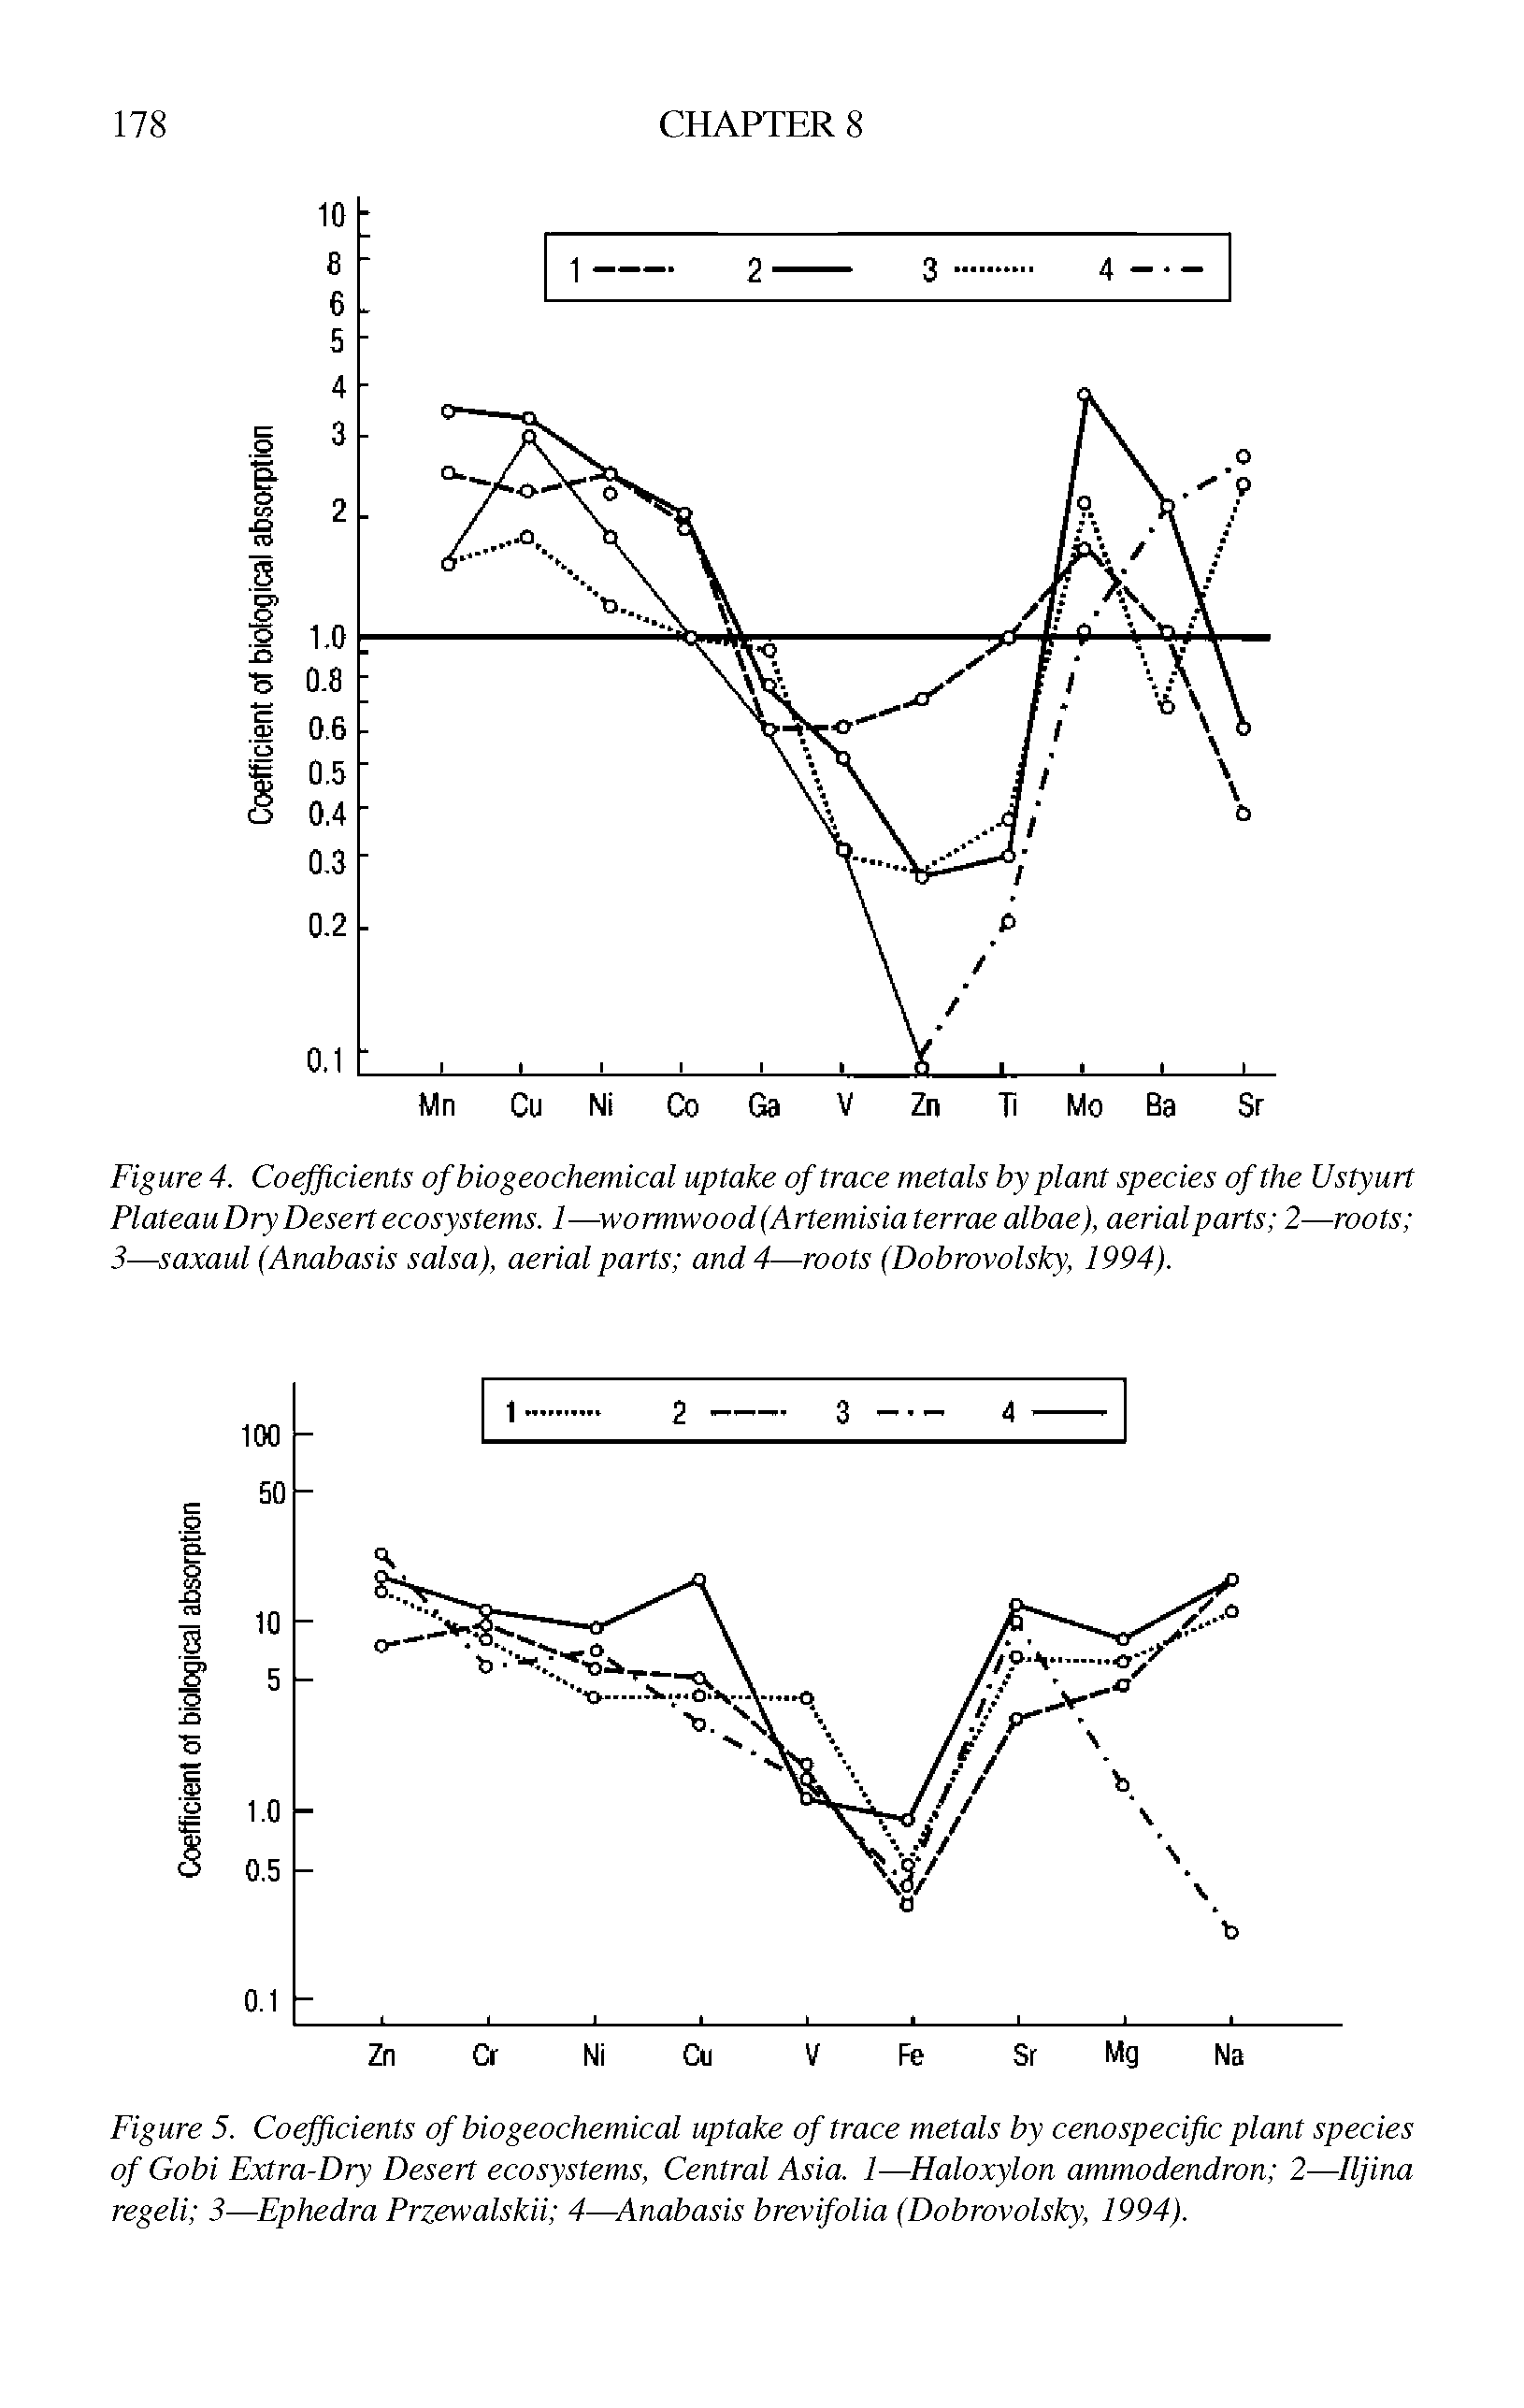 Figure 5. Coefficients of bio geochemical uptake of trace metals by cenospecific plant species of Gobi Extra-Dry Desert ecosystems, Central Asia. 1—Flaloxylon ammodendron 2—Iljina regeli 3—Ephedra Przewalskii 4—Anabasis brevifolia (Dobrovolsky, 1994).